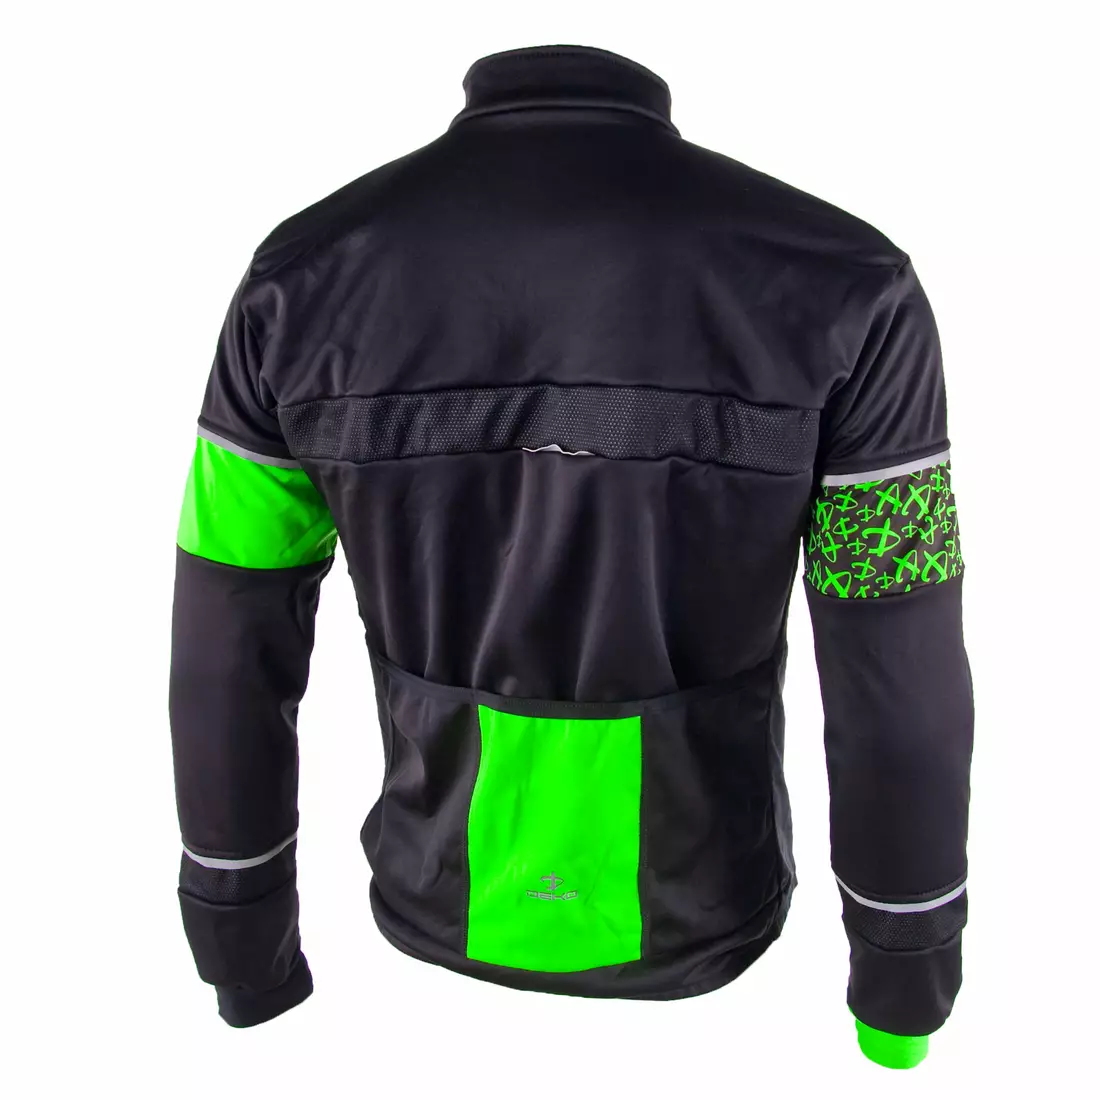 Cyklistická softshellová bunda DEKO KOLUN černo-fluor zelená